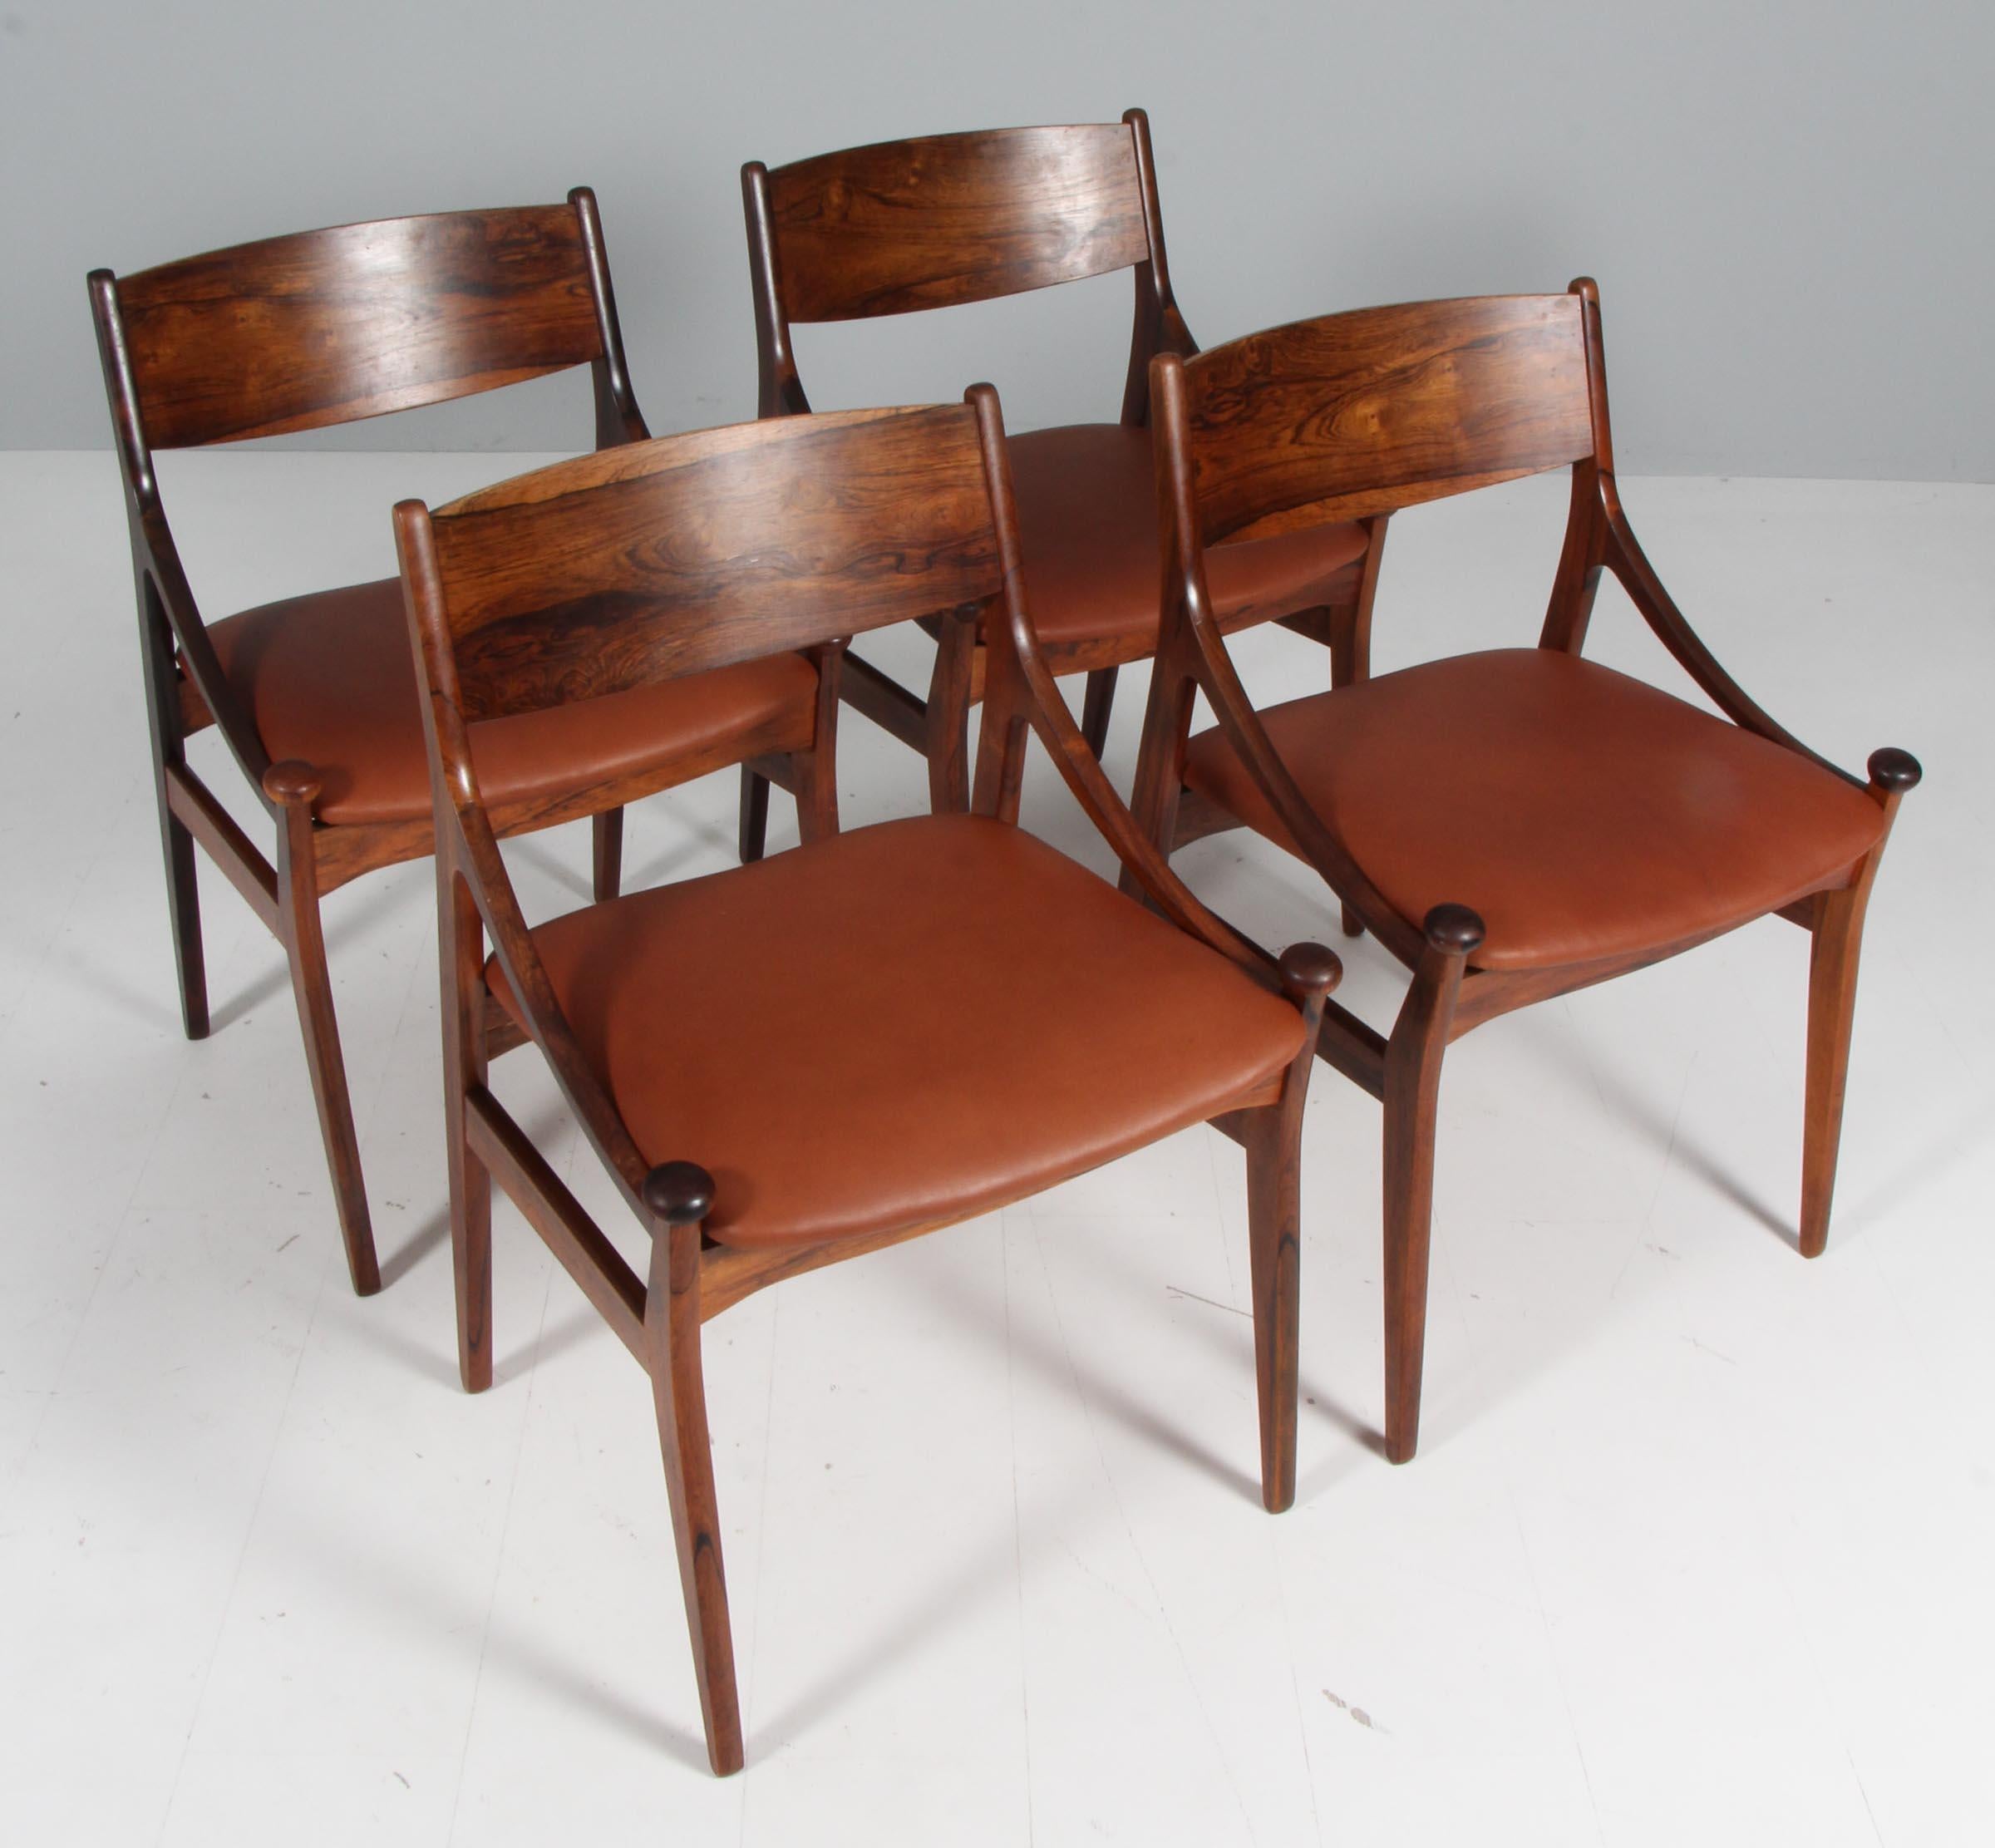 Vestervig Eriksen set of four dining chairs in partly solid rosewood.

Seats new upholstered with tan vintage aniline leather.

Made by Brdr. Tromborg’s Eftf., Møbelfabrik Vestervig Eriksen Aarhus.